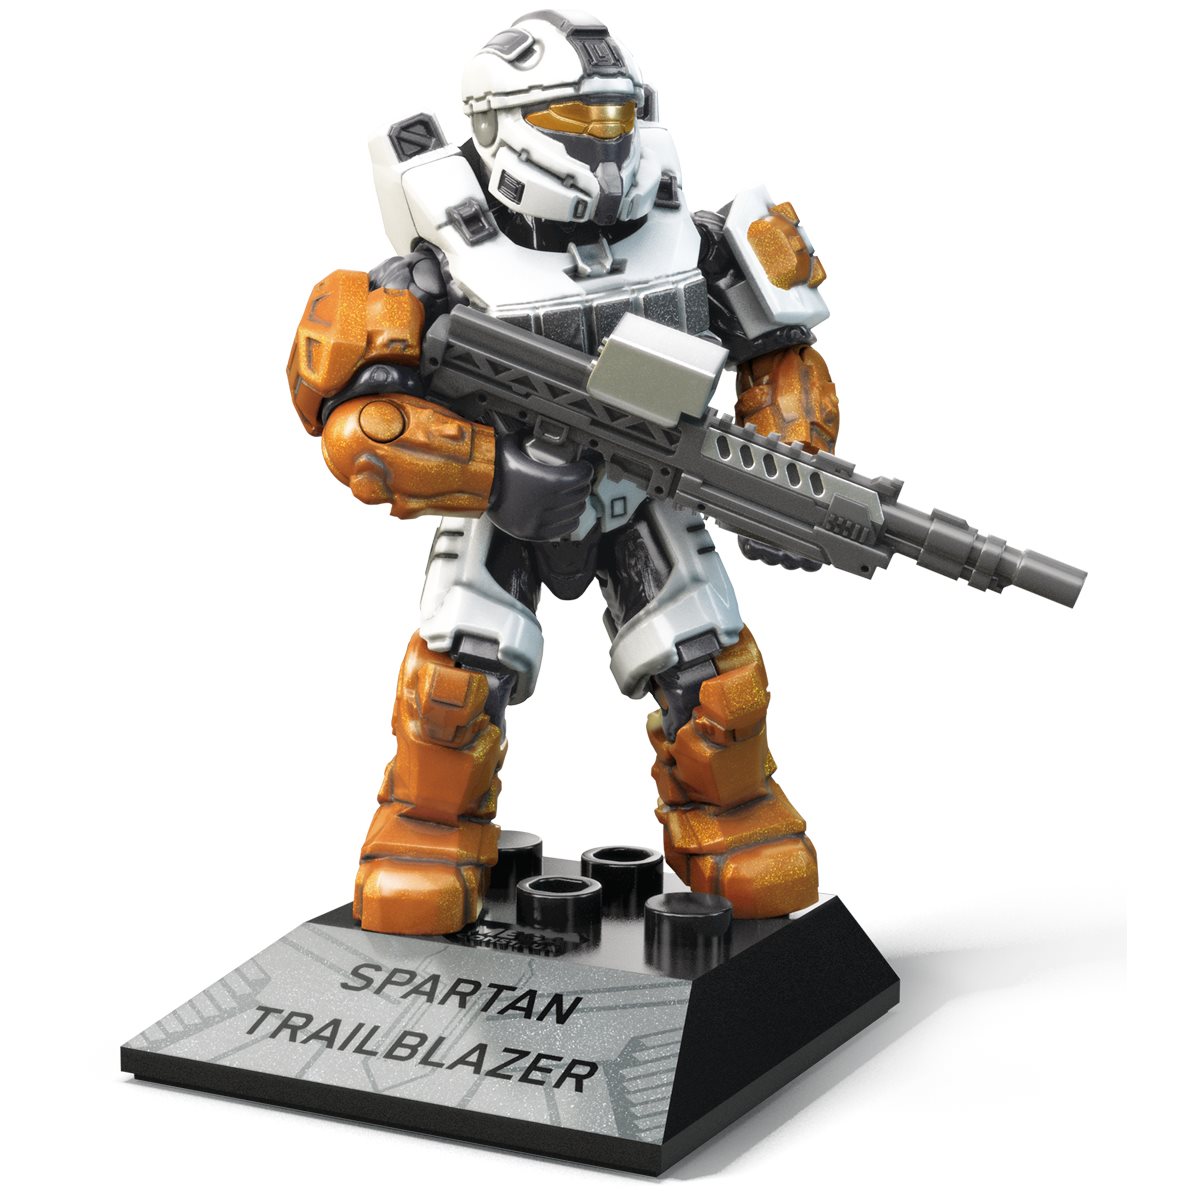 Mega Construx Halo Master Chief Infinite Series 13 Mini Figure